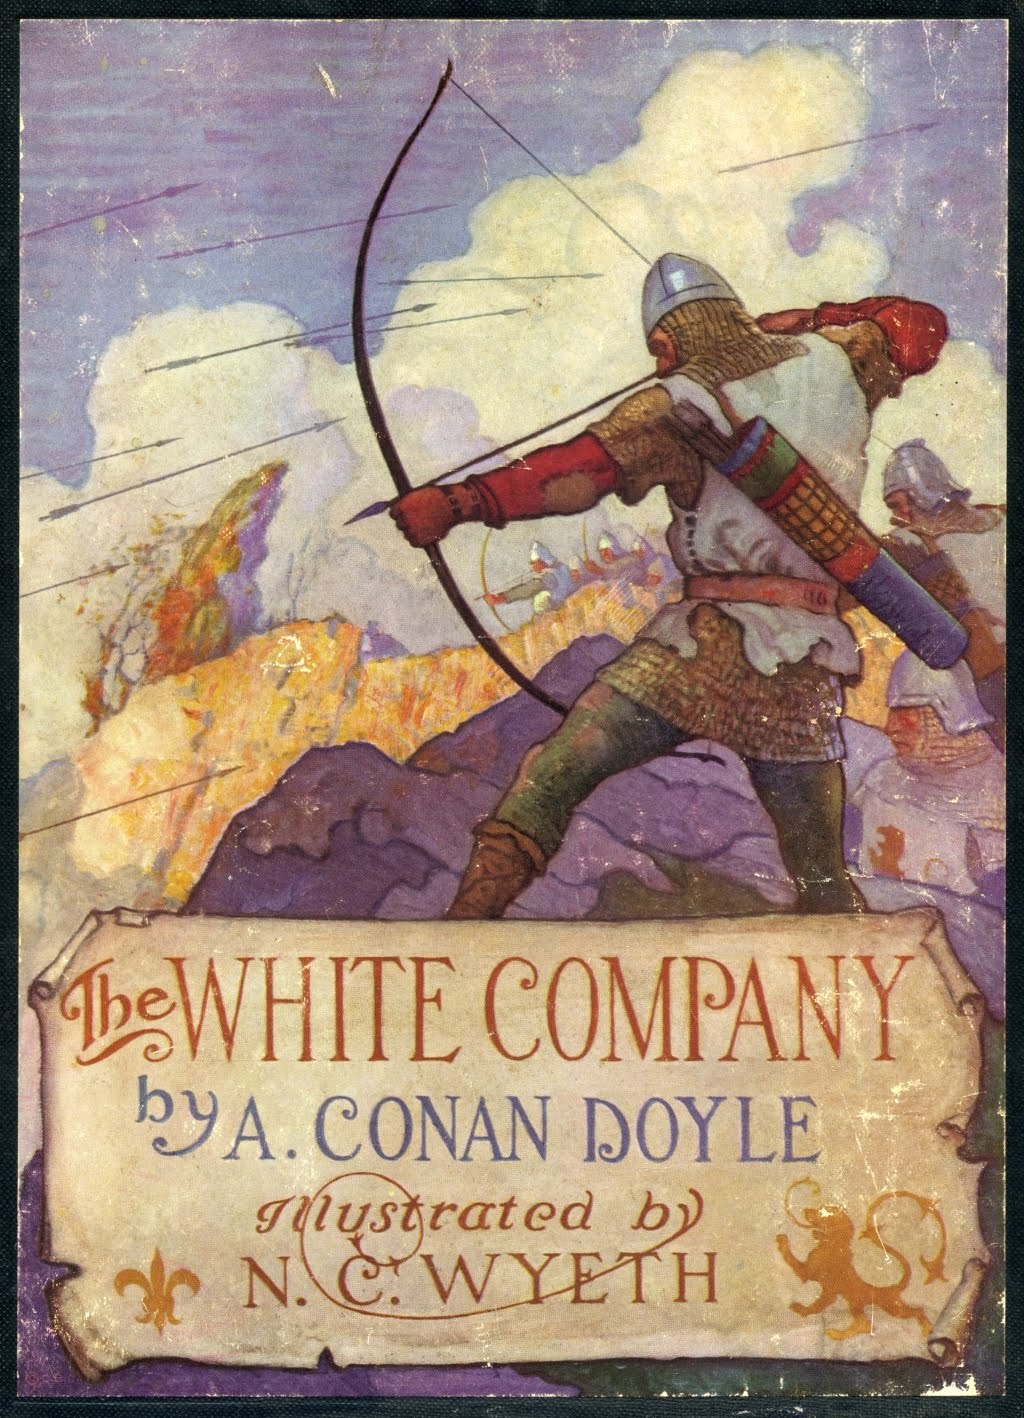 wonderful-strange:
“The White Company by A. Conan Doyle, illustrated by N.C. Wyeth, 1922.
”